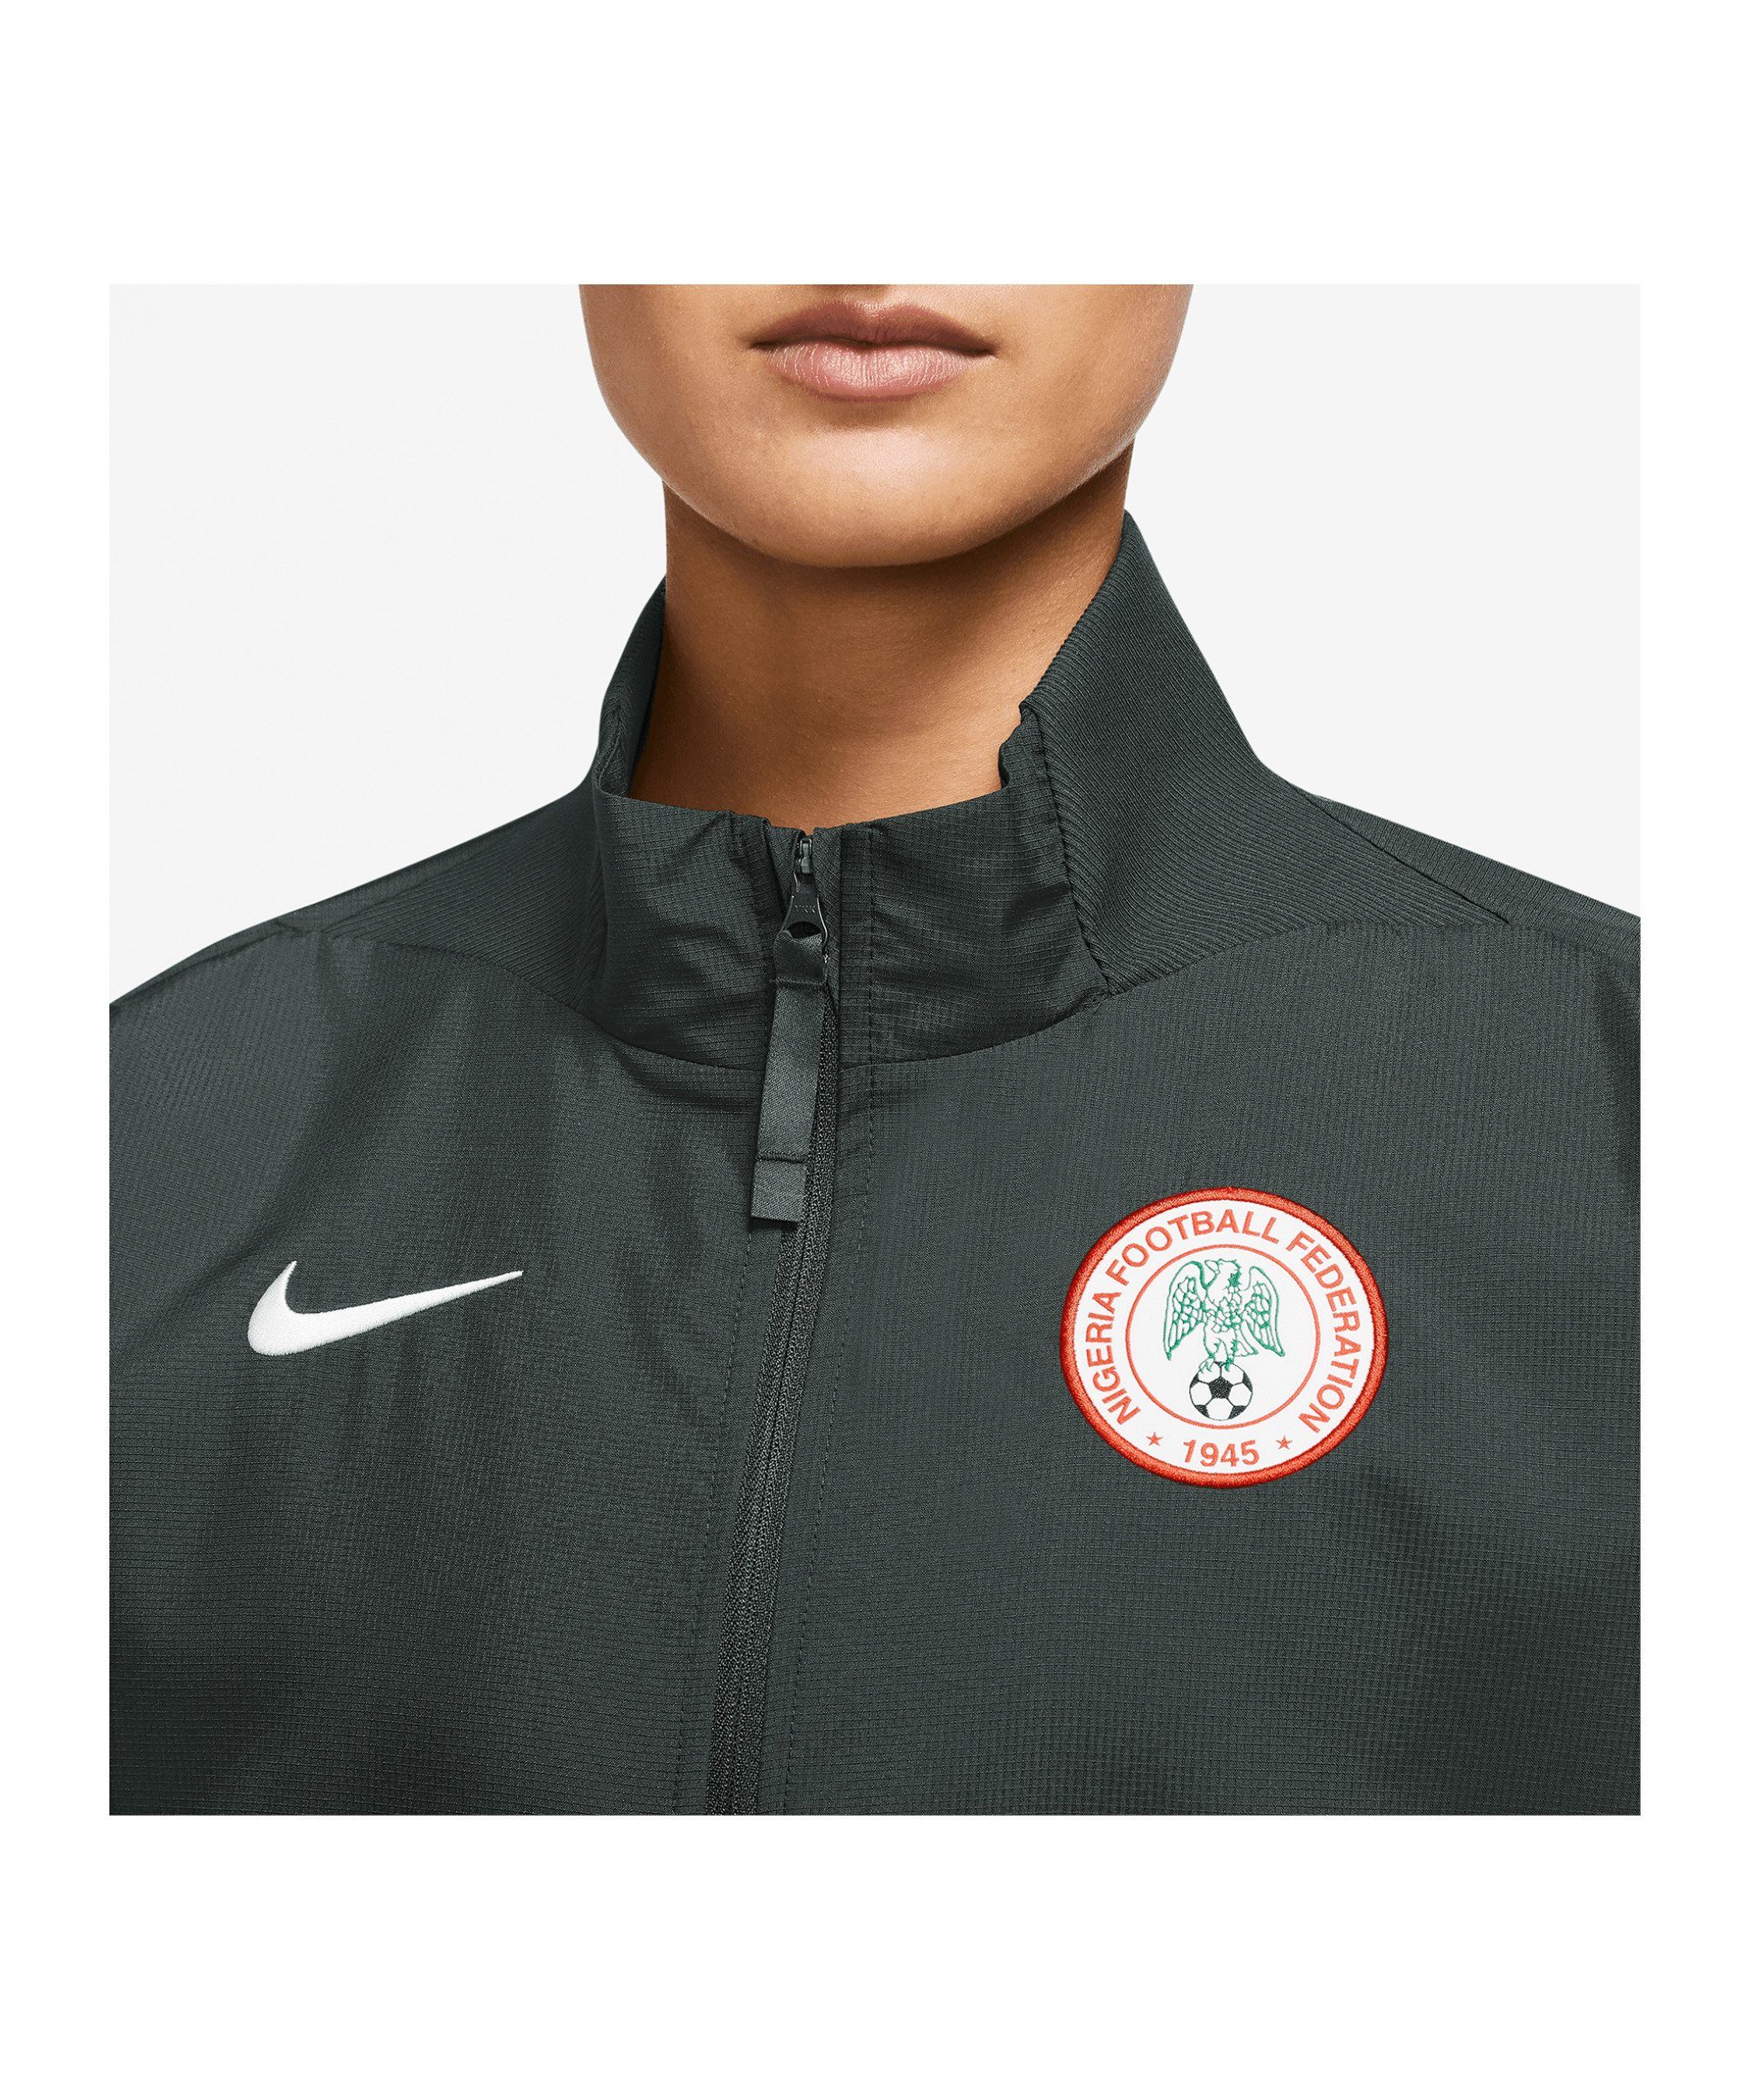 Anthem Nike Sommerjacke Damen Jacke Nigeria